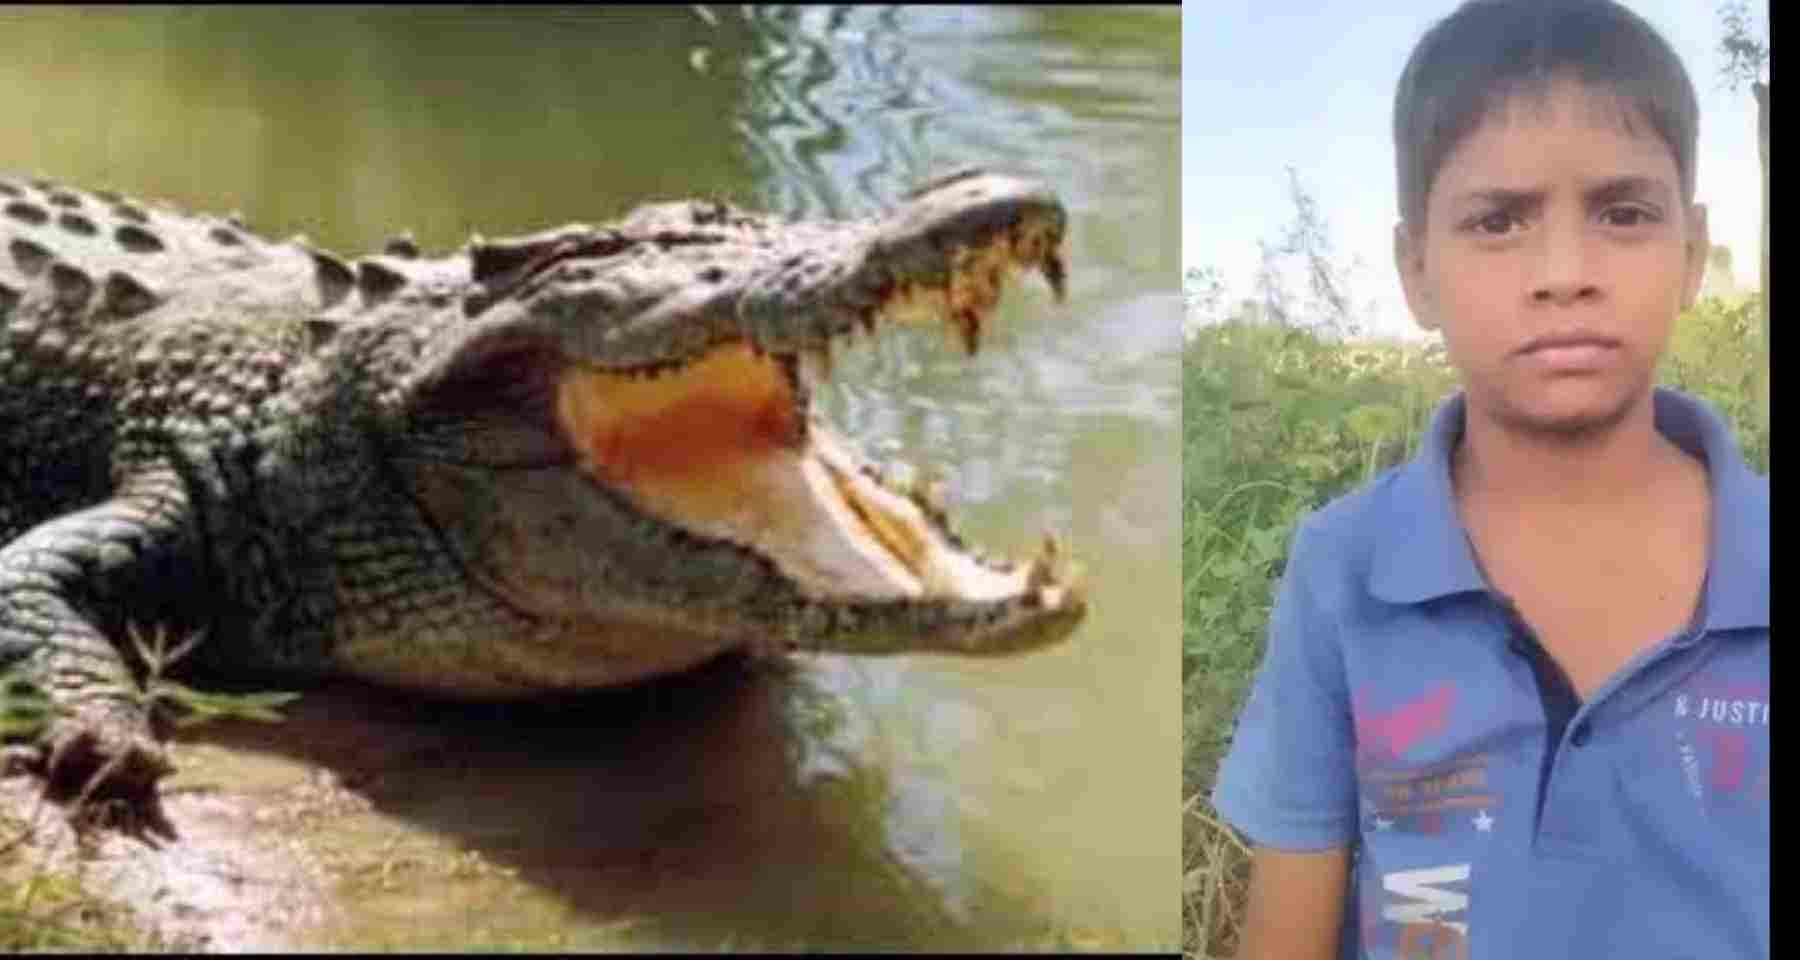 Uttarakhand news: Crocodile swallowed child in khatima body found in UP attack